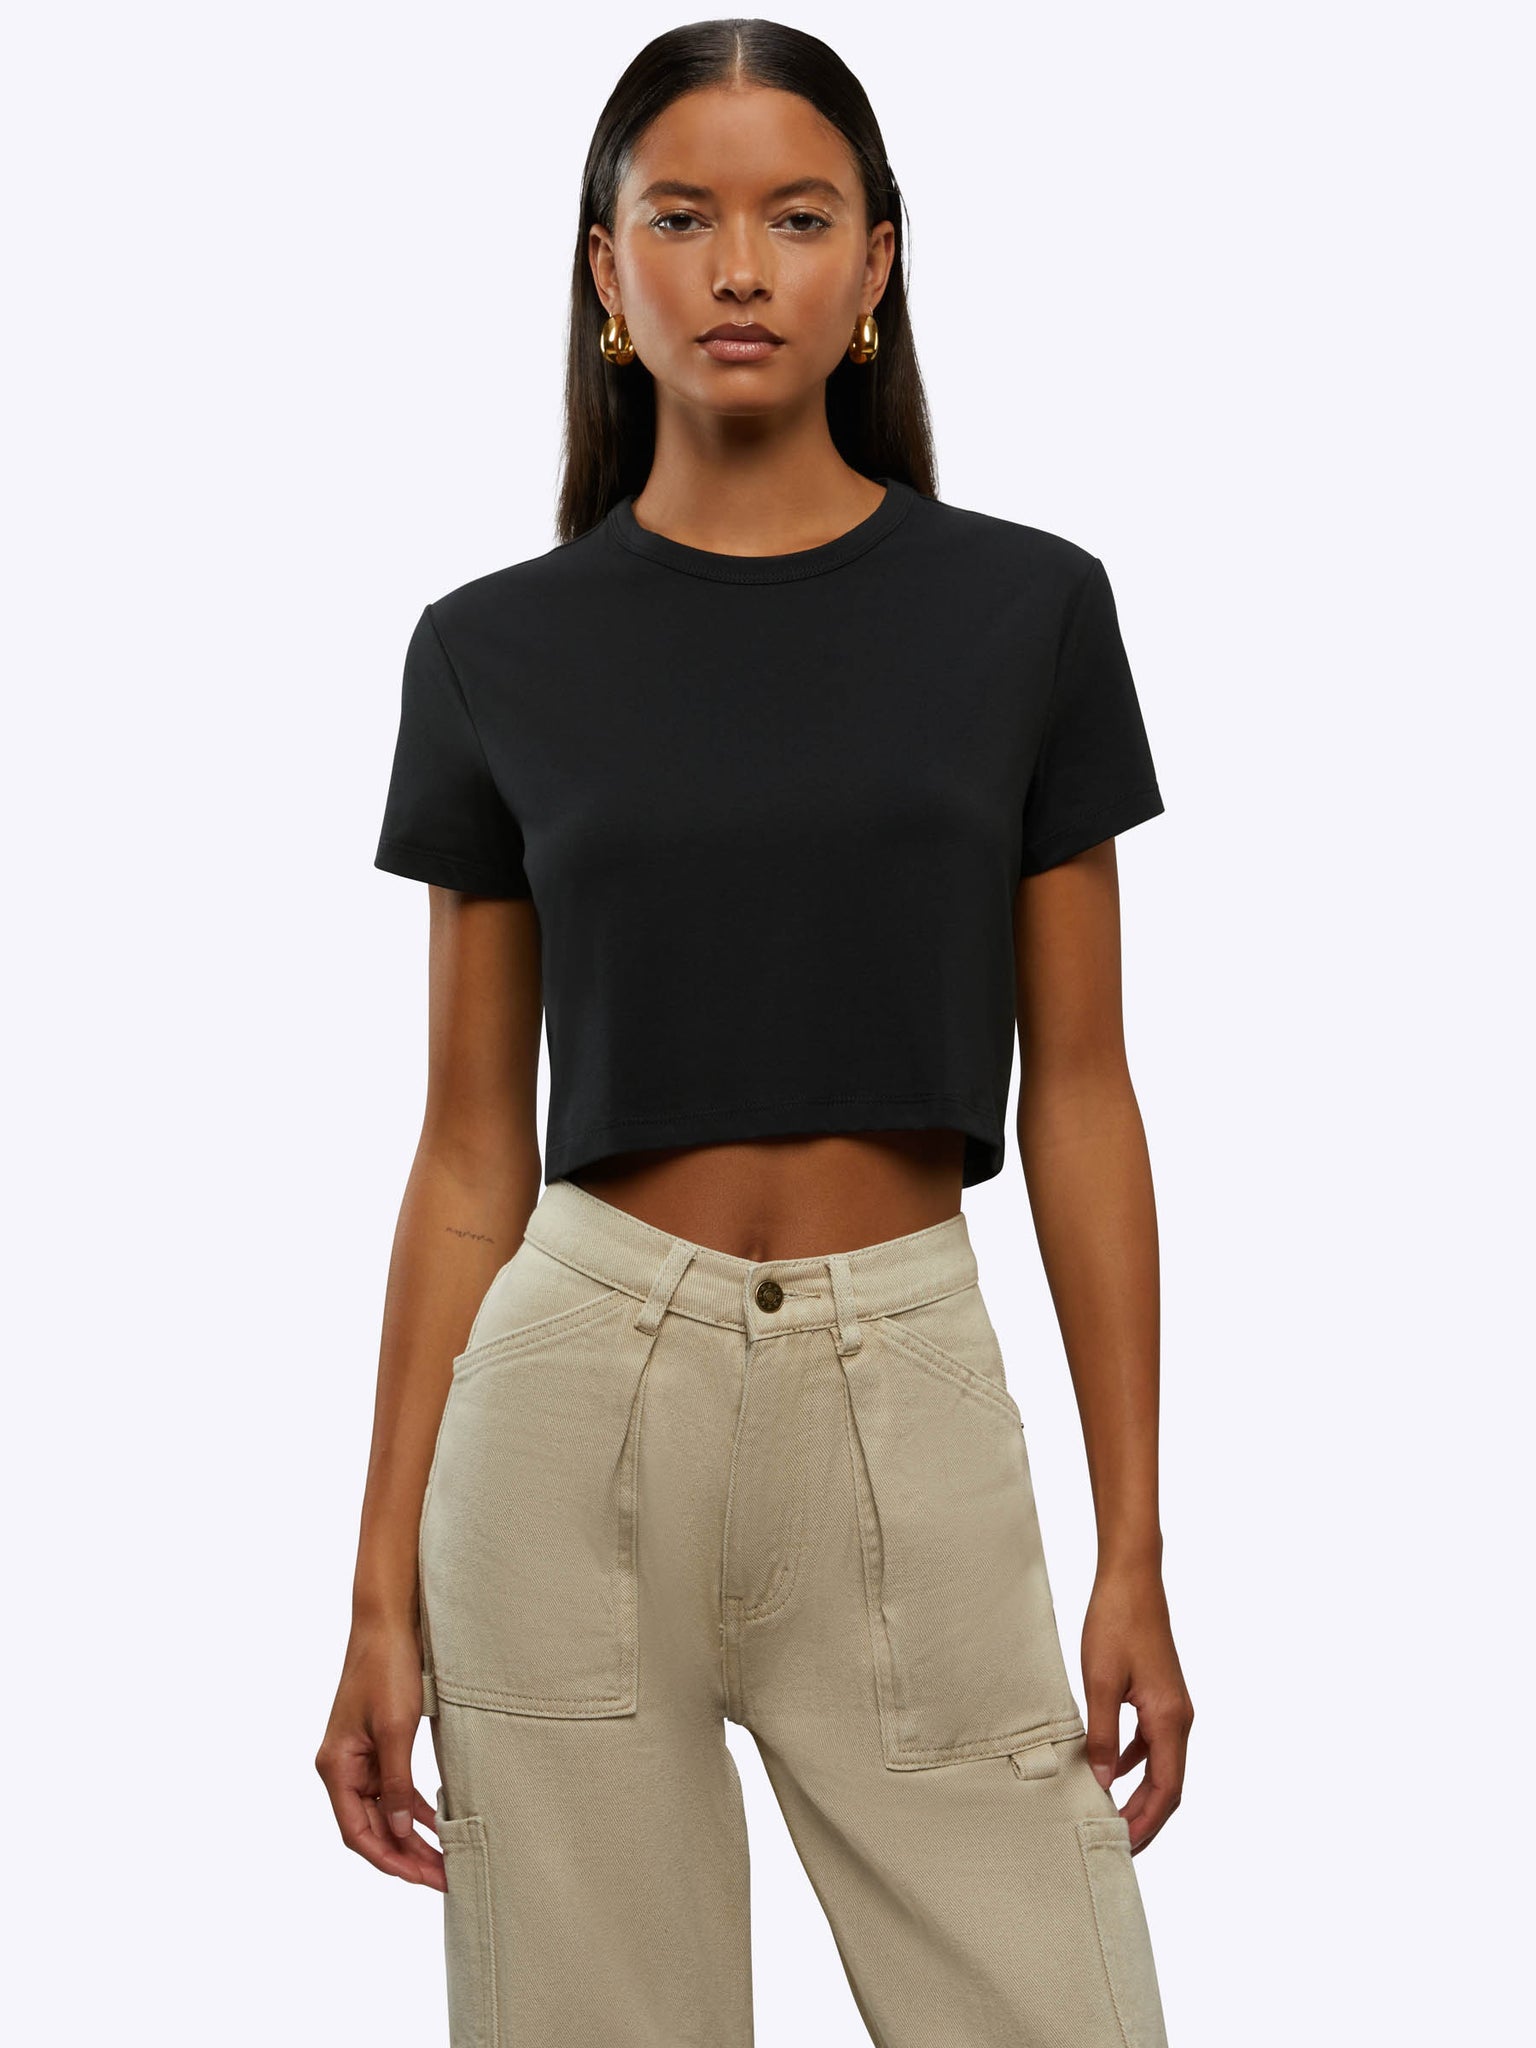 Black Cropped tee shirt on model 